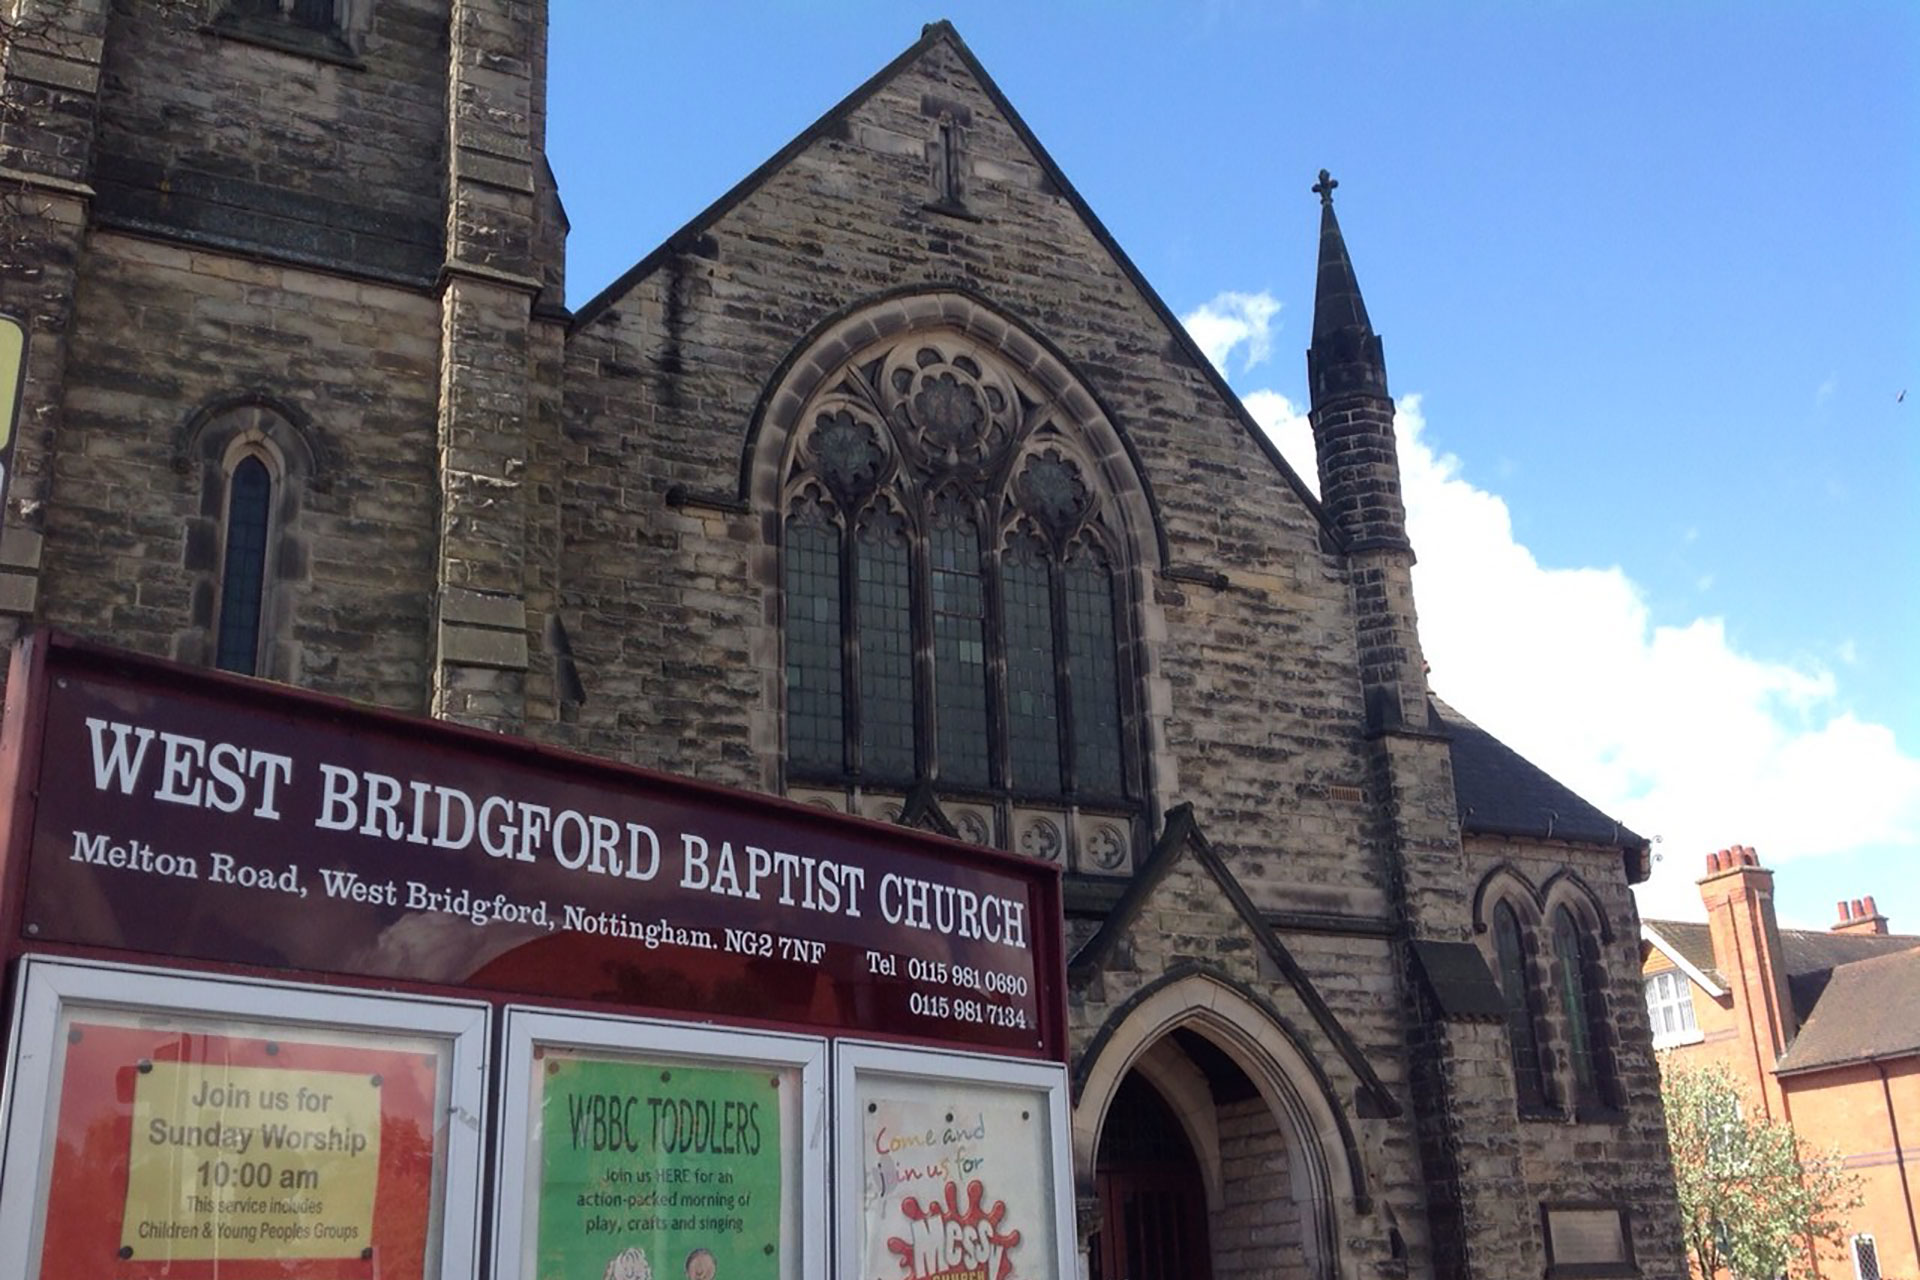 West Bridgford Church